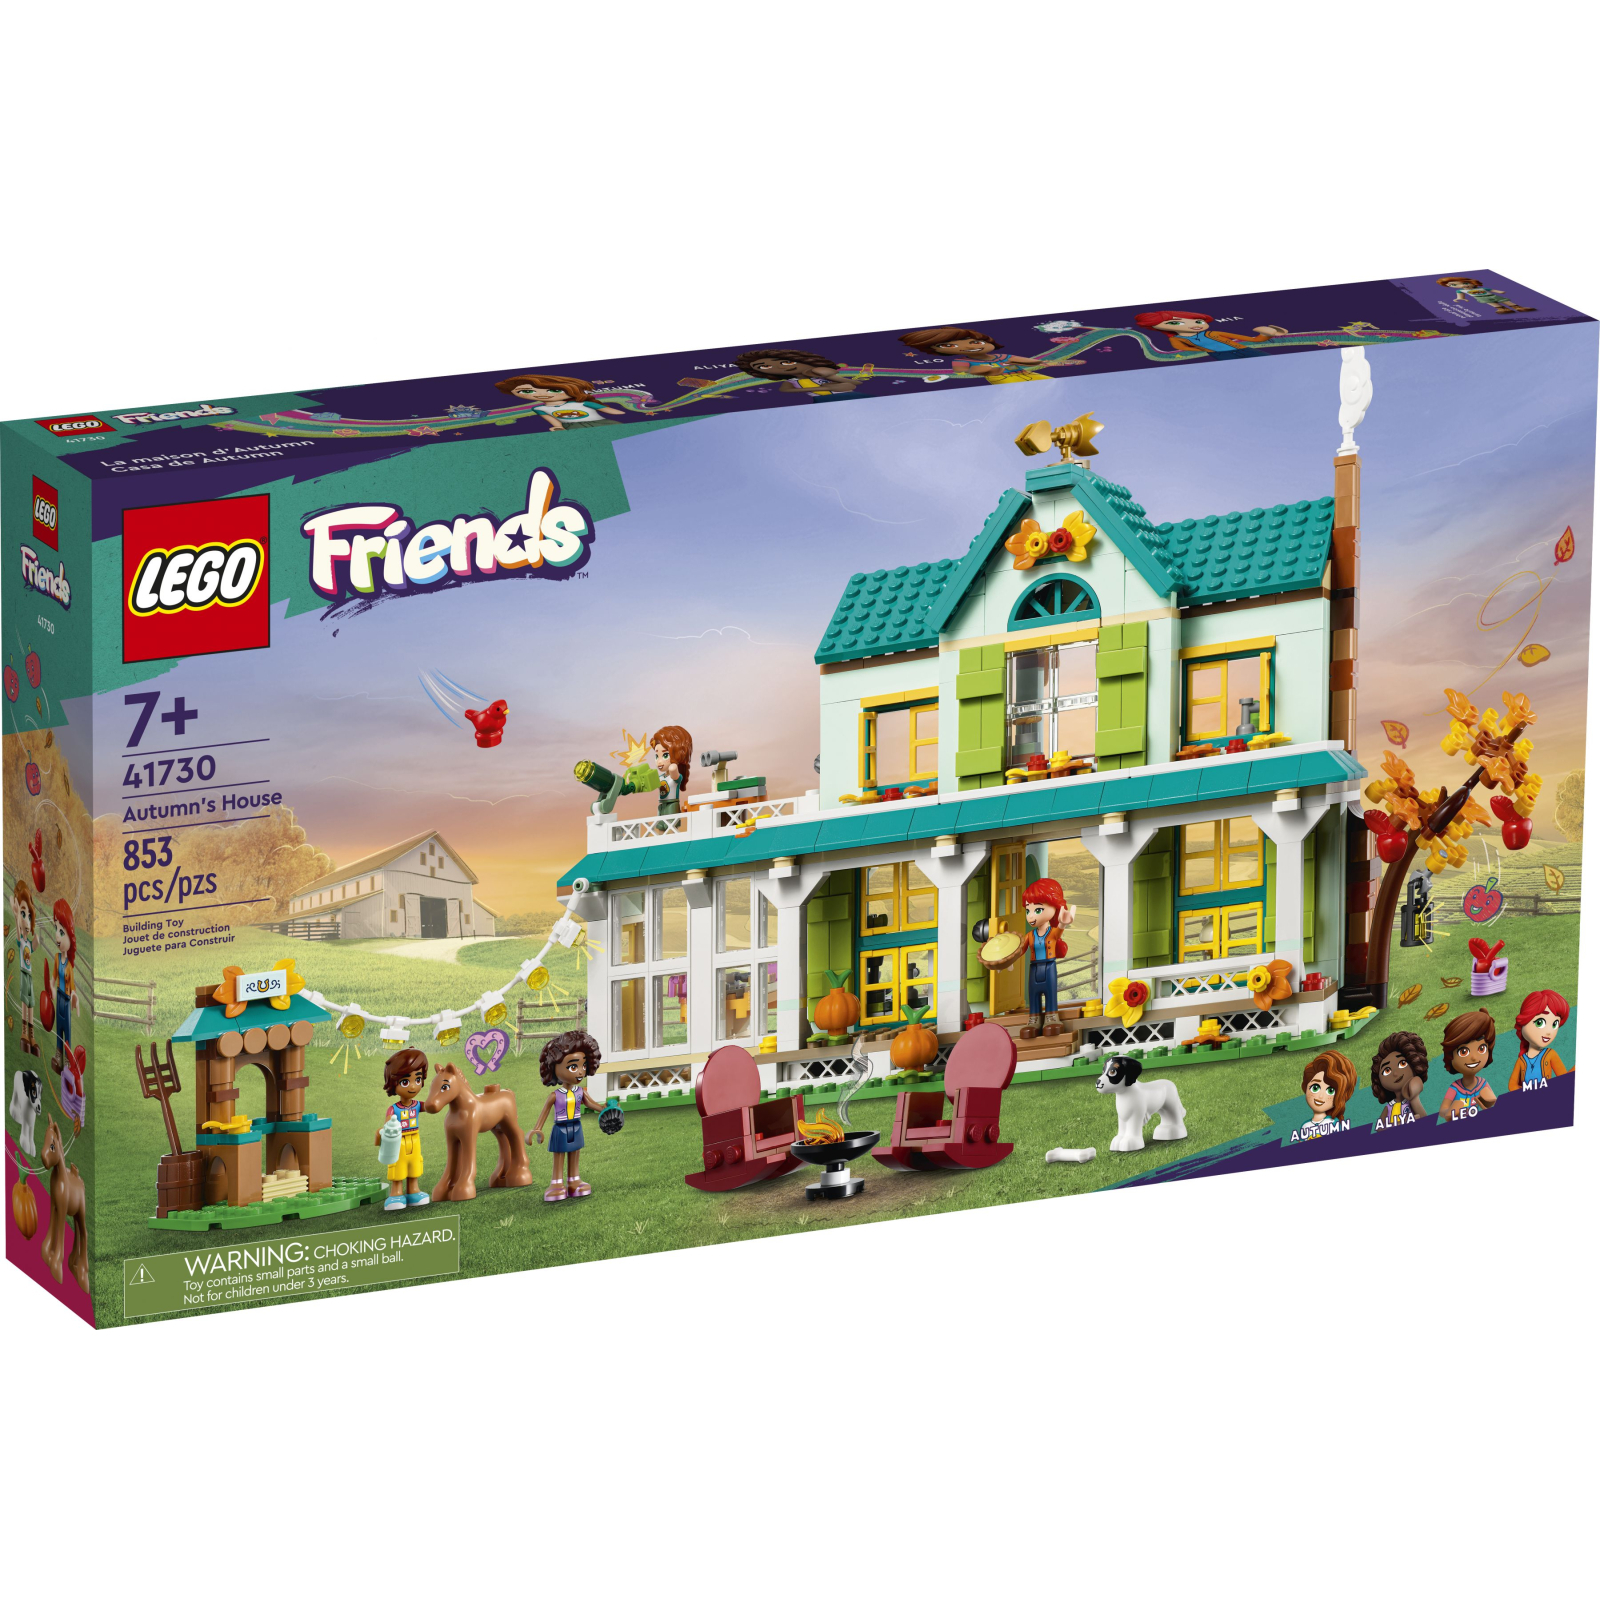 Конструктор LEGO Friends Будиночок Отом 853 деталі (41730)